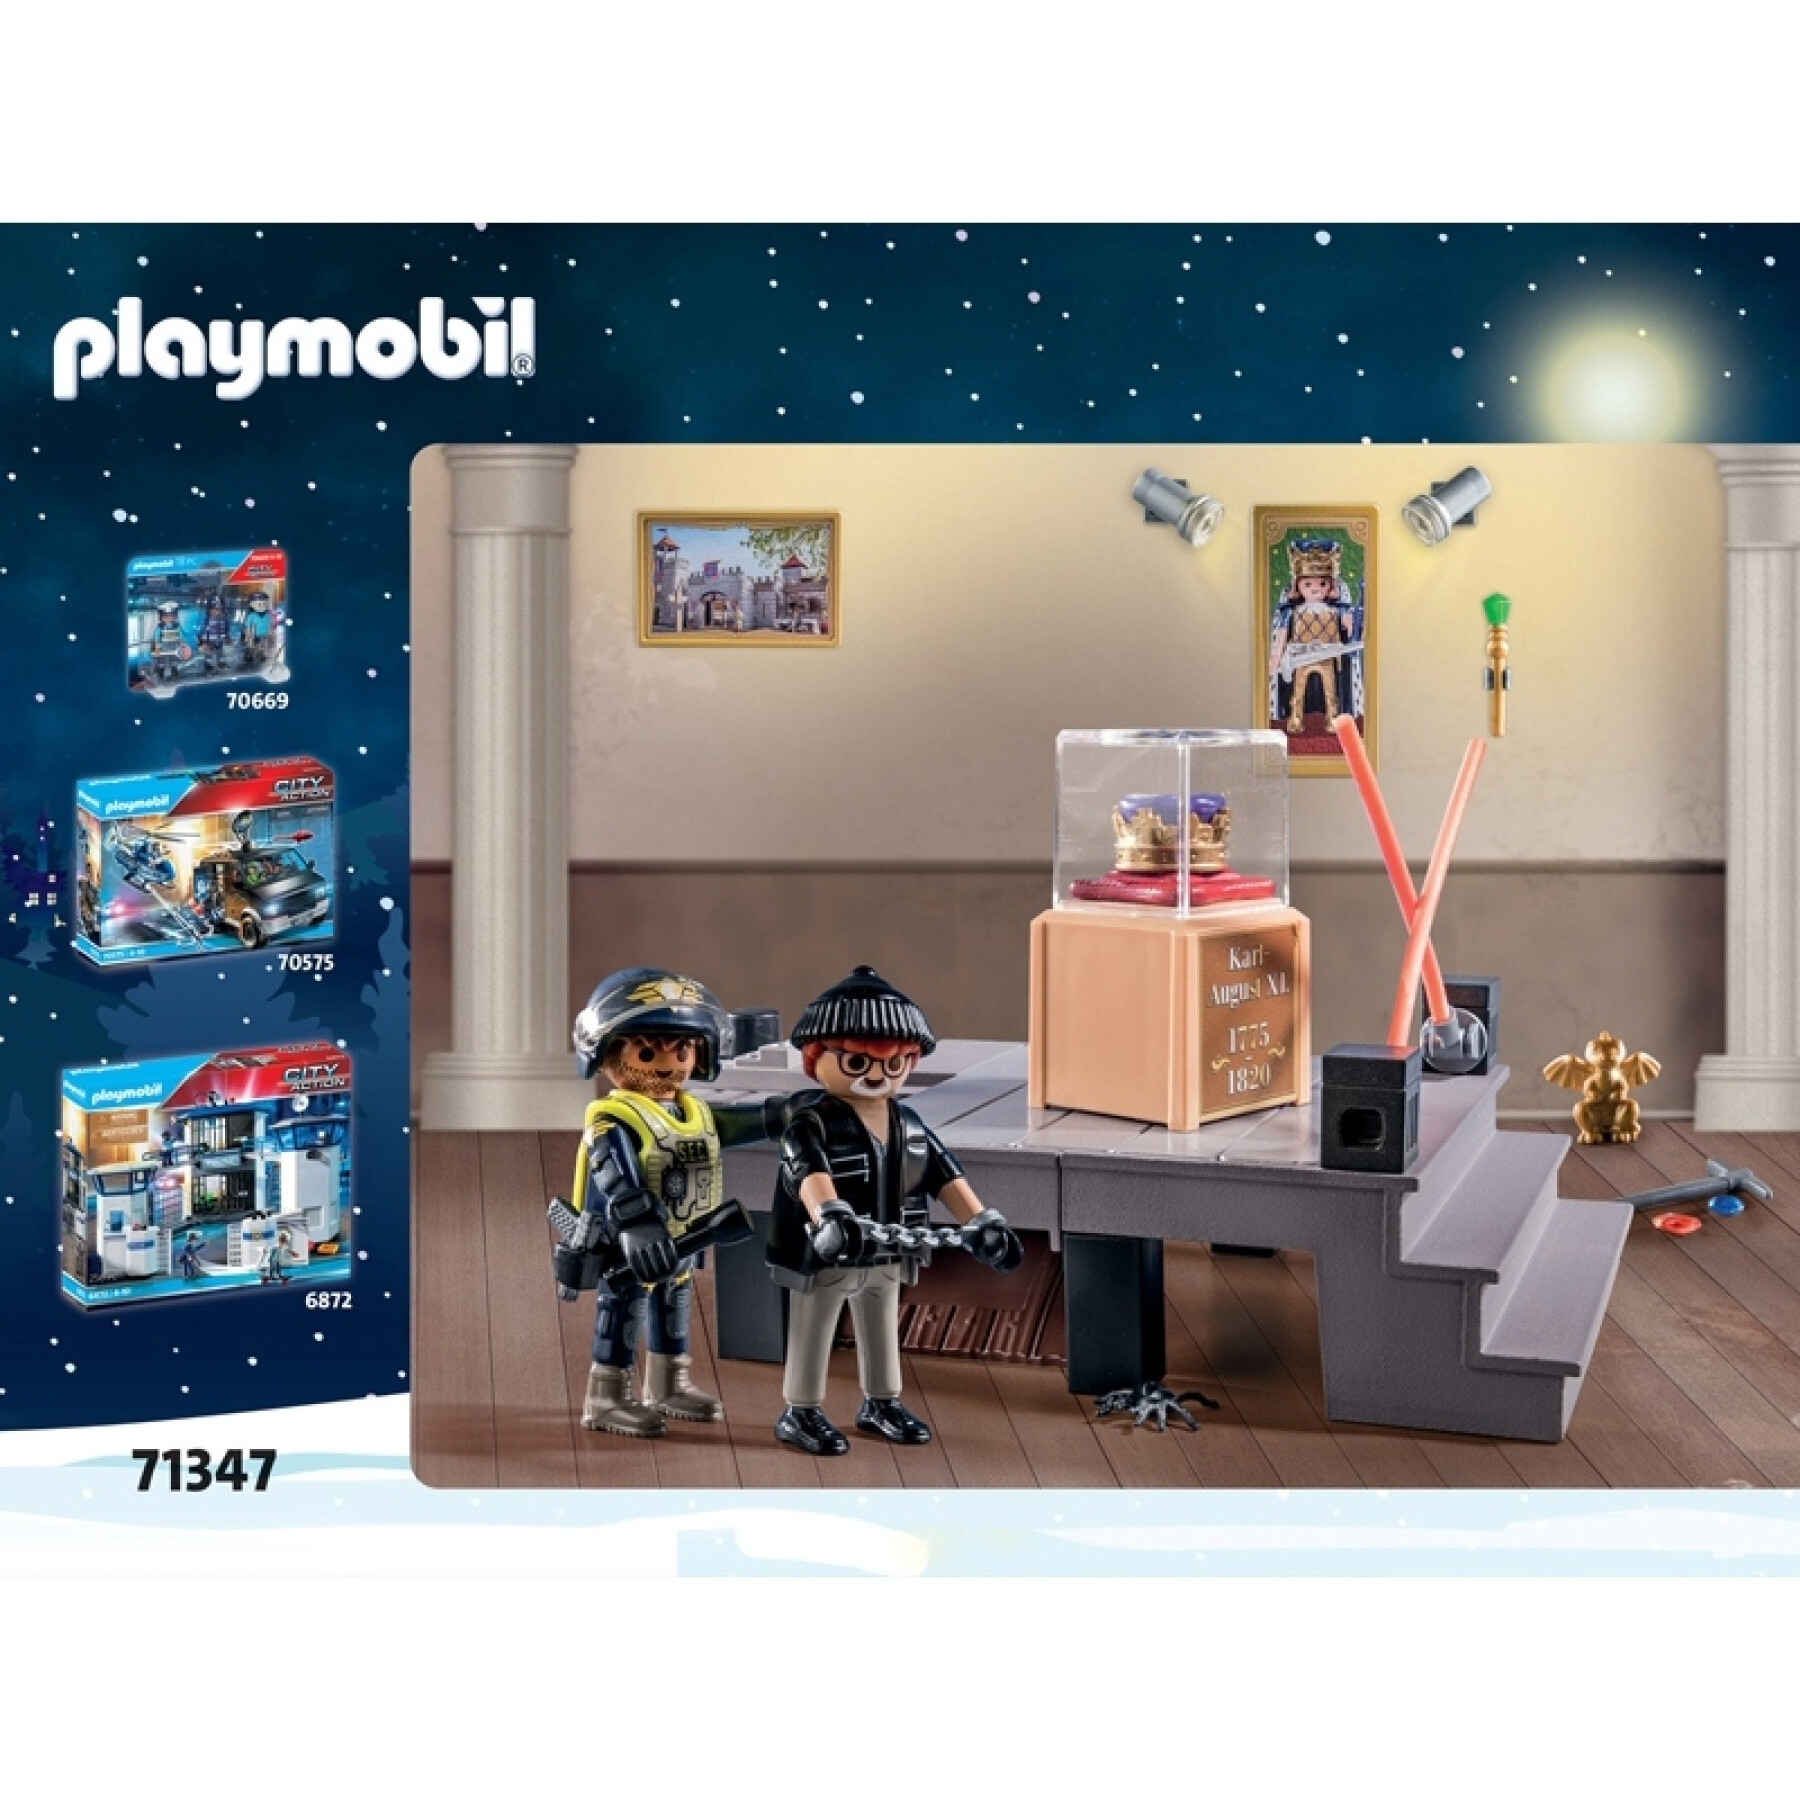 Jeux d'imagination Calendrier avent police Playmobil